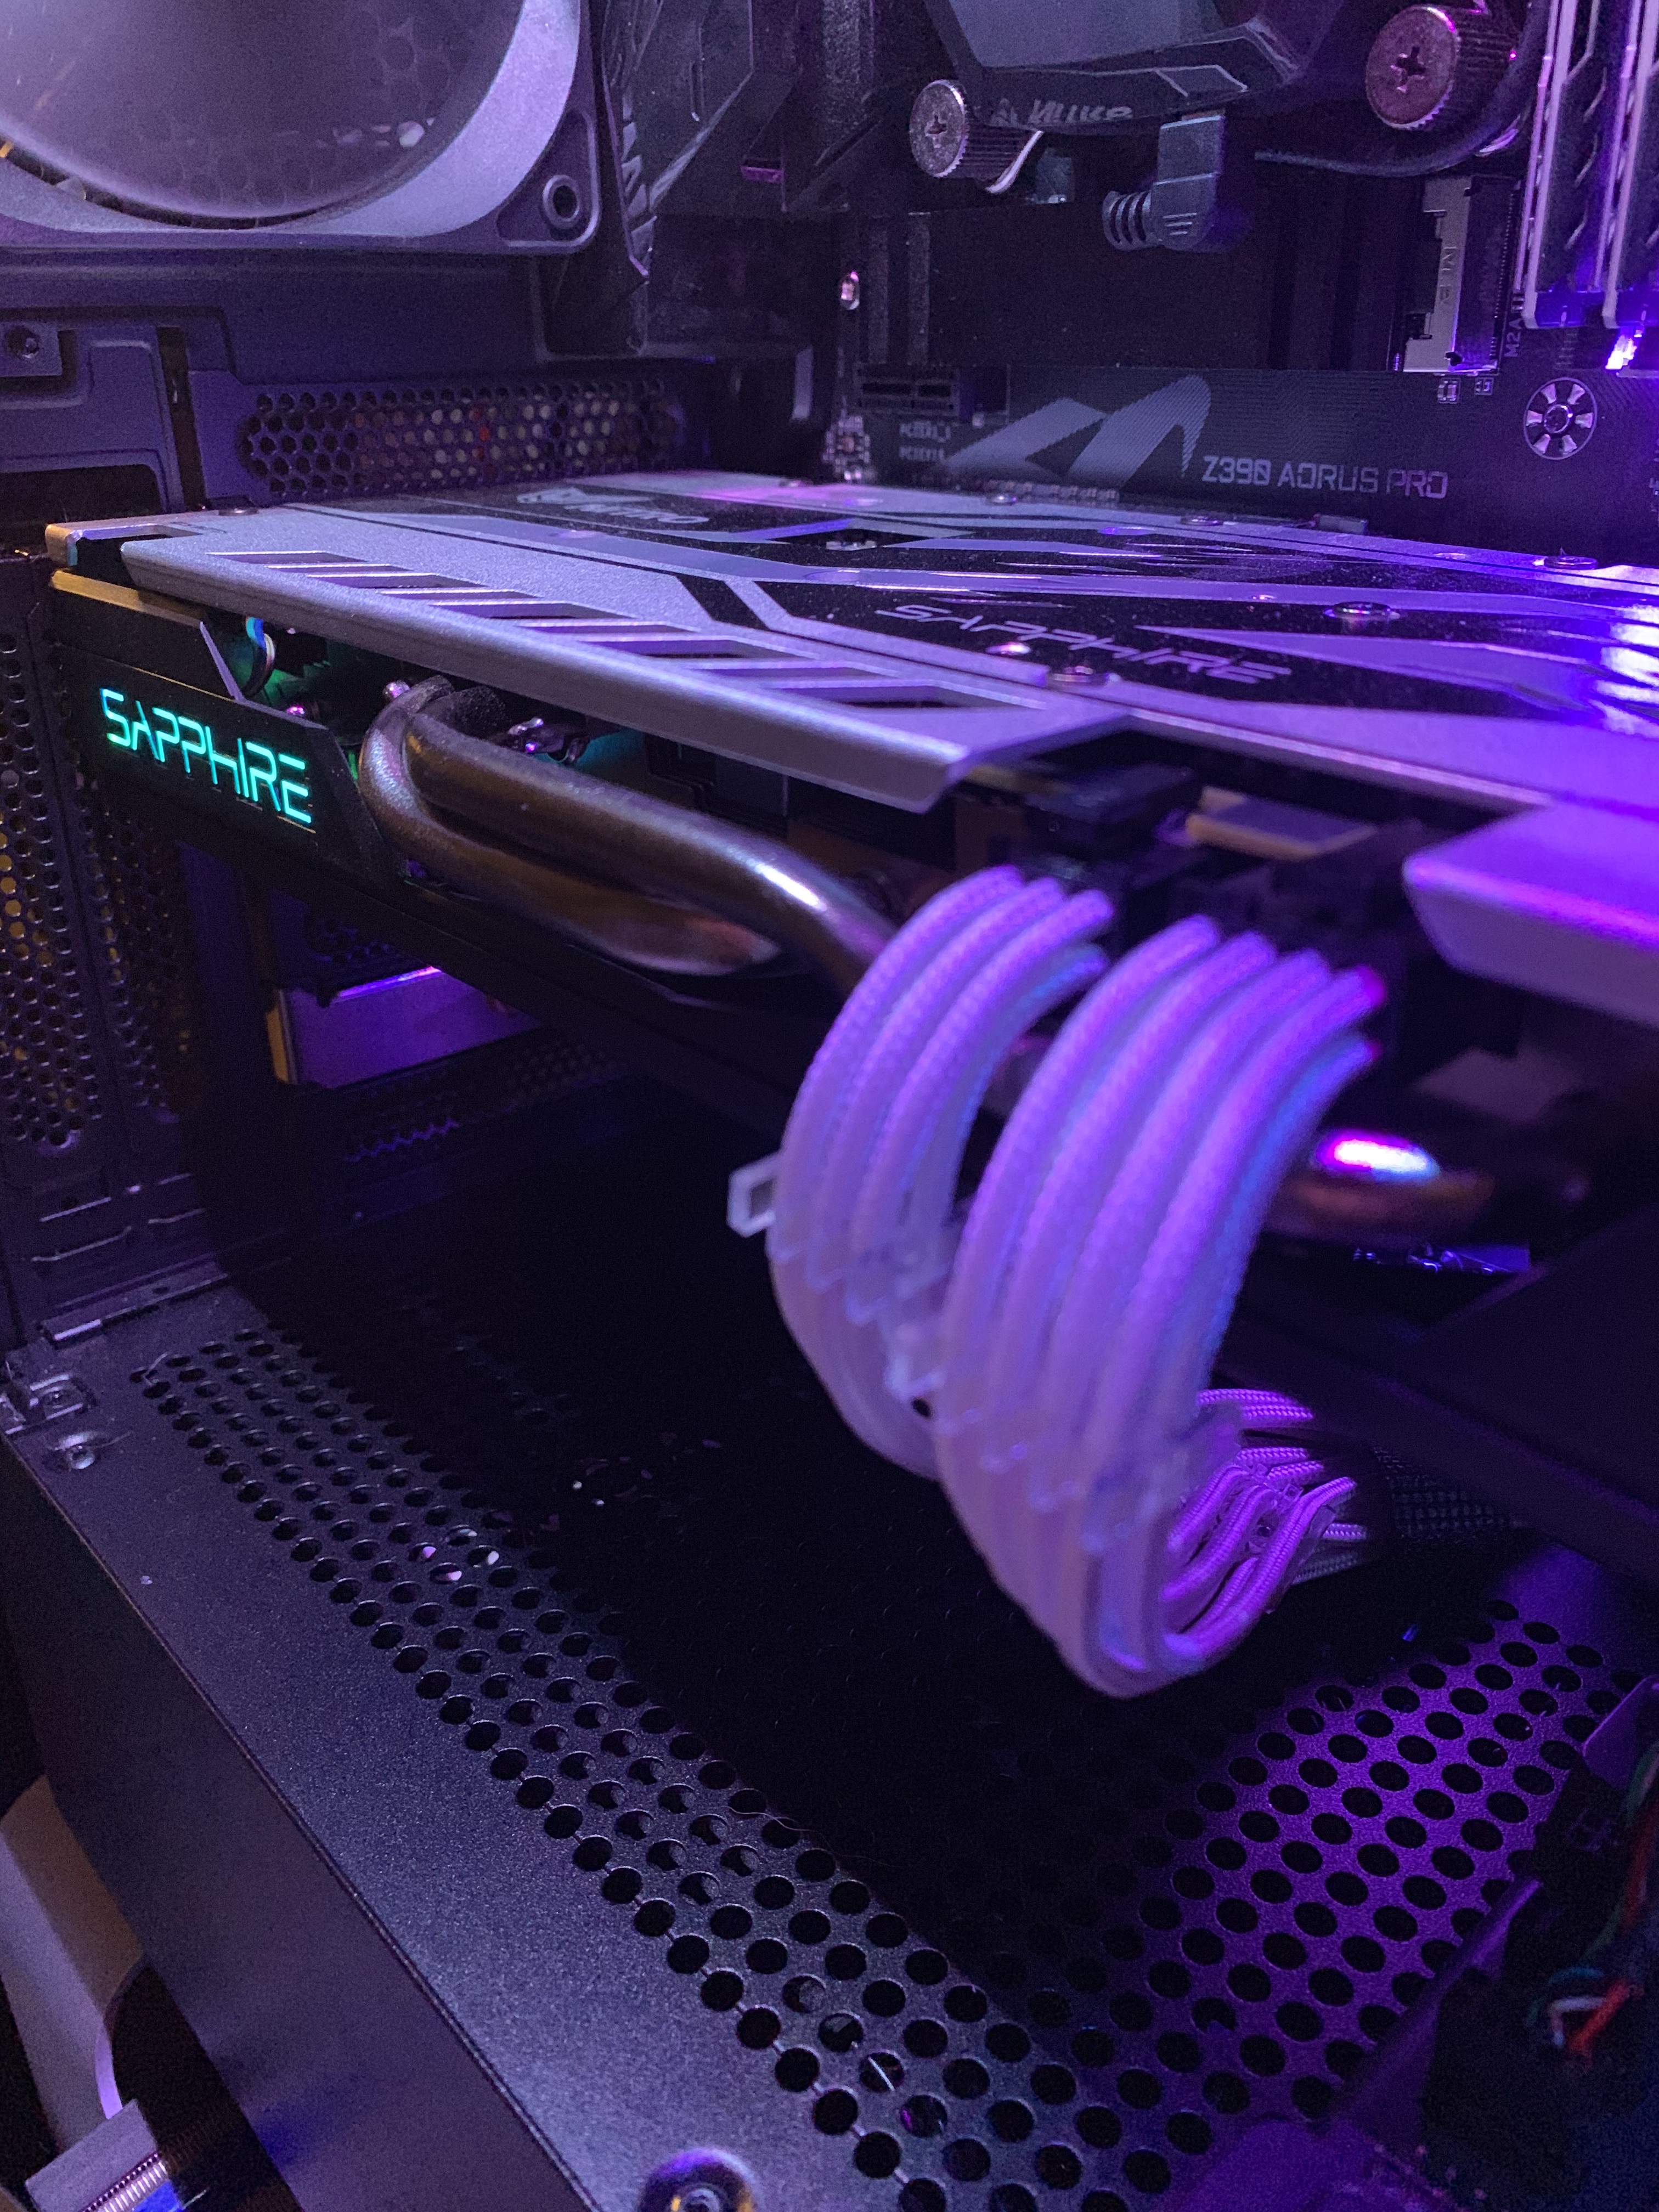 nⓩxtMac Pro GPU and Cable Sleeves